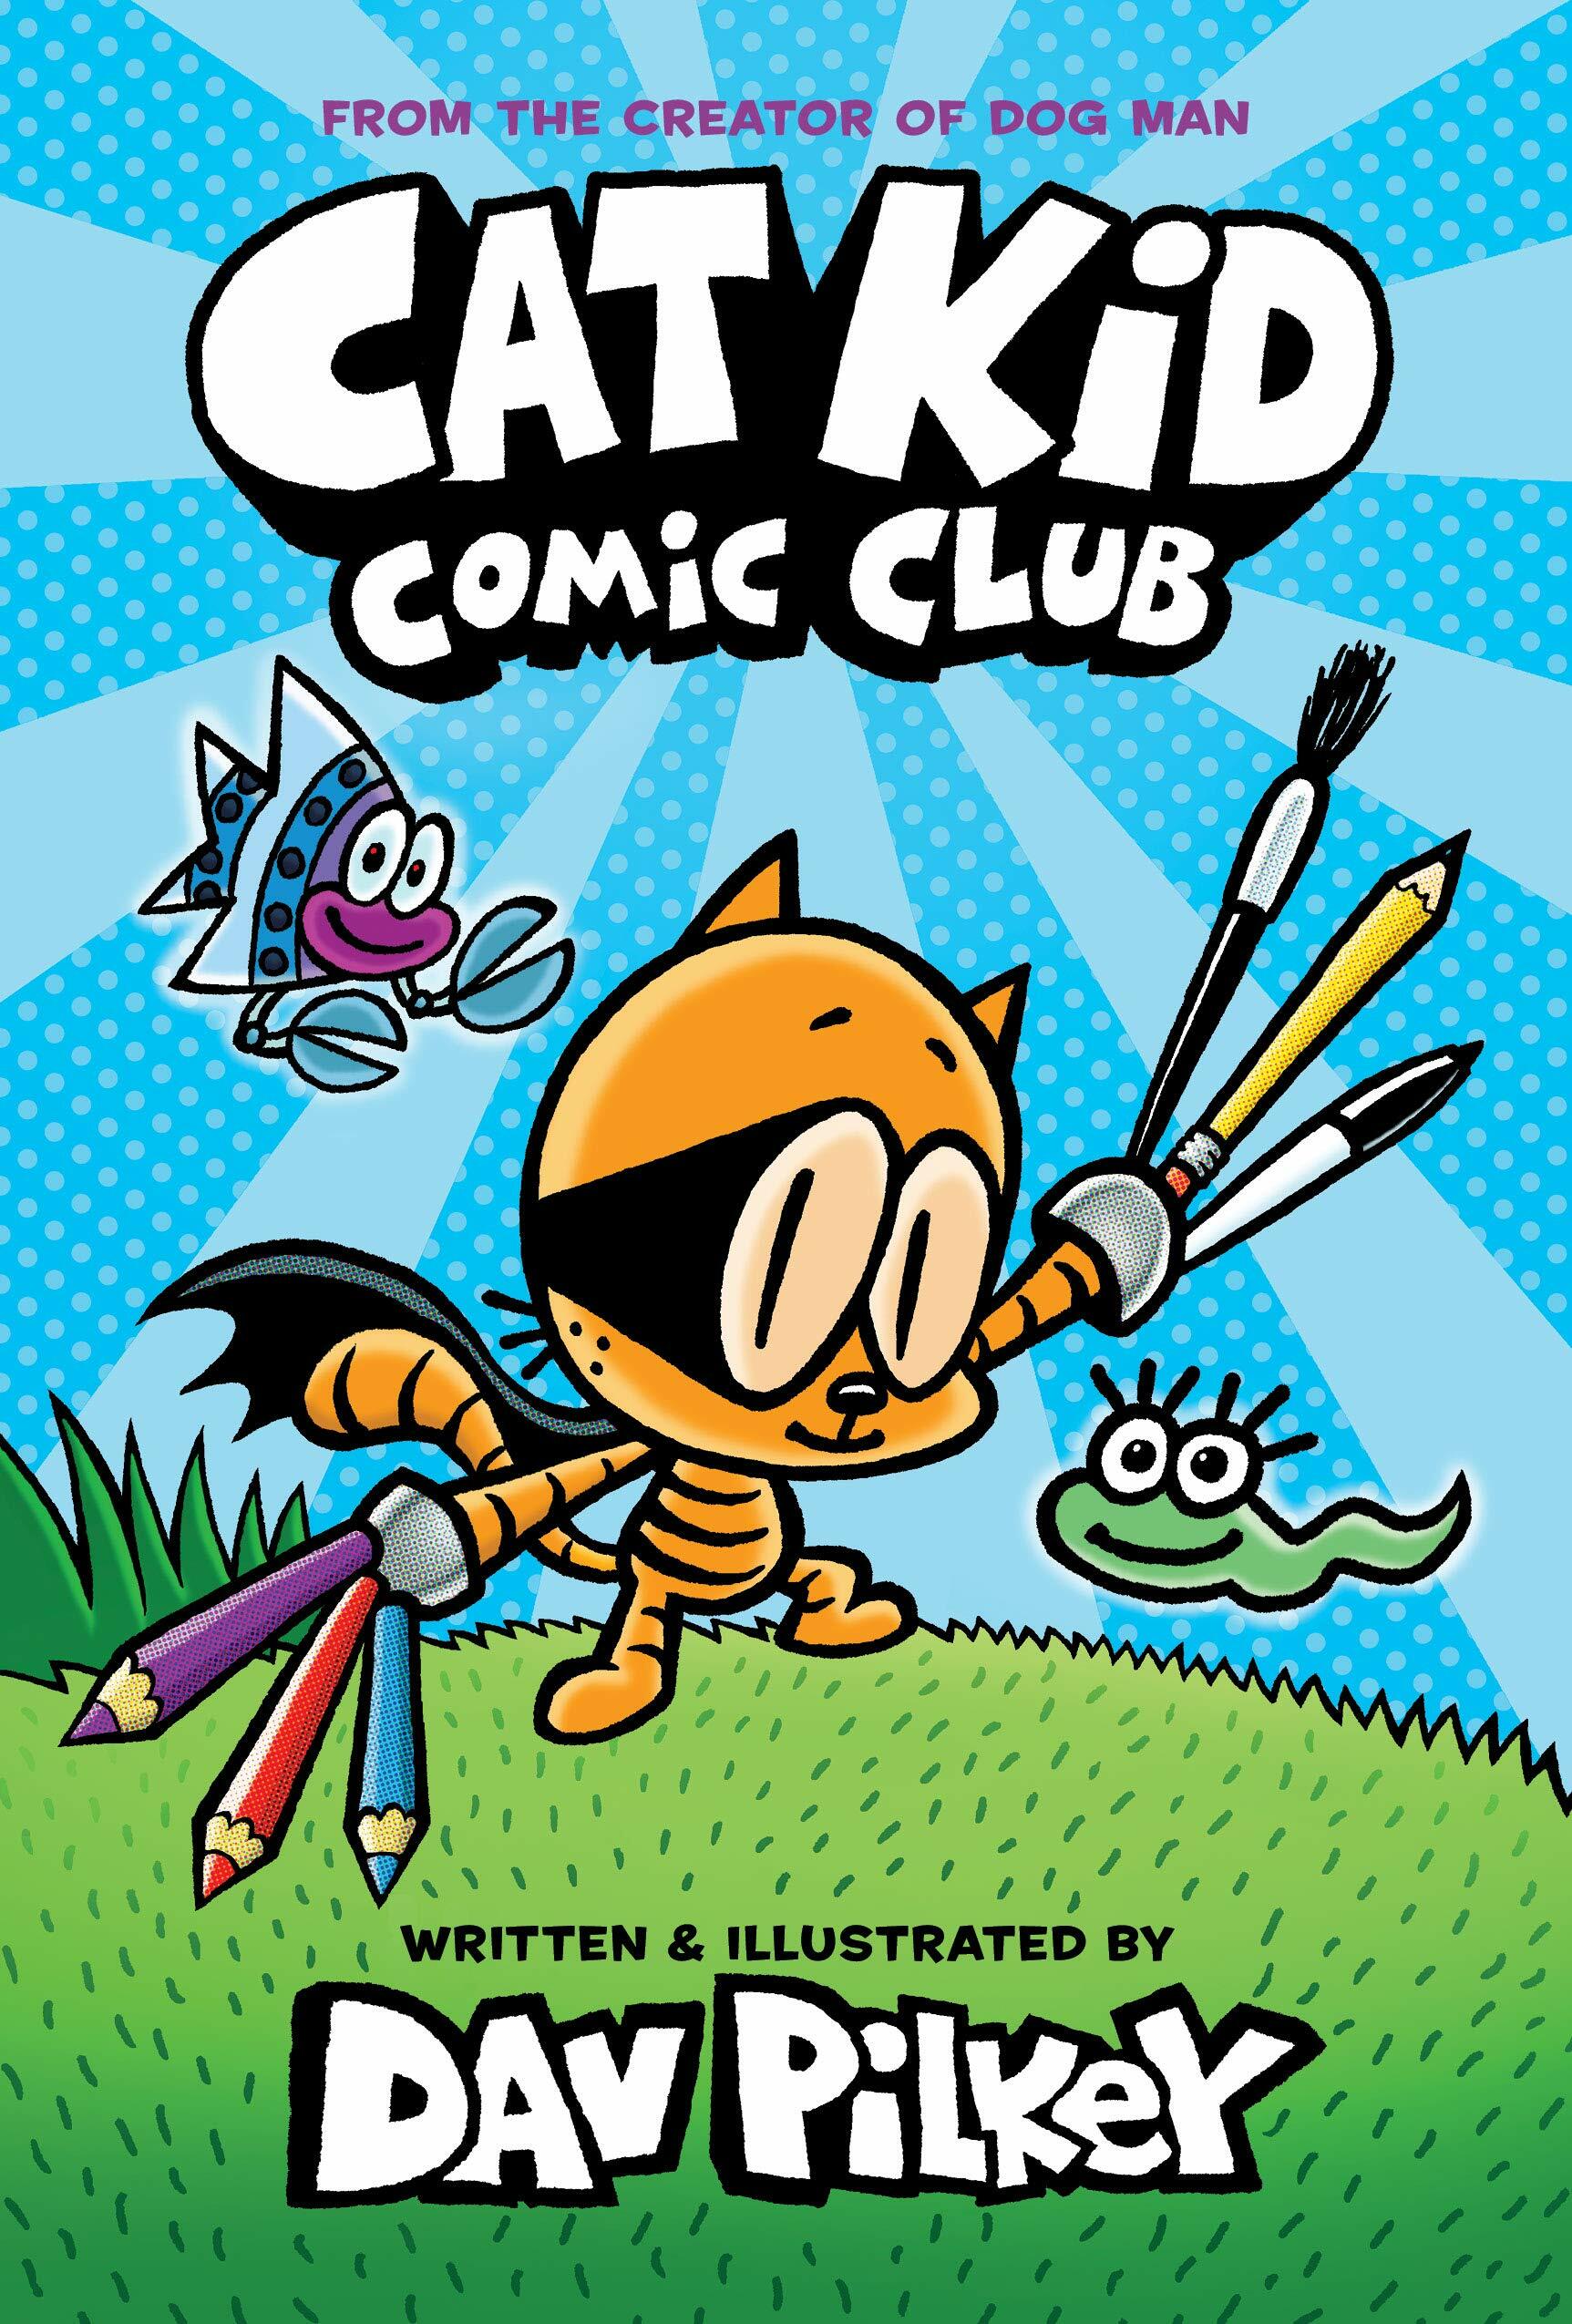 Cat Kid Comic Club #1: From the Creator of Dog Man (From the Creator of Dog Man)